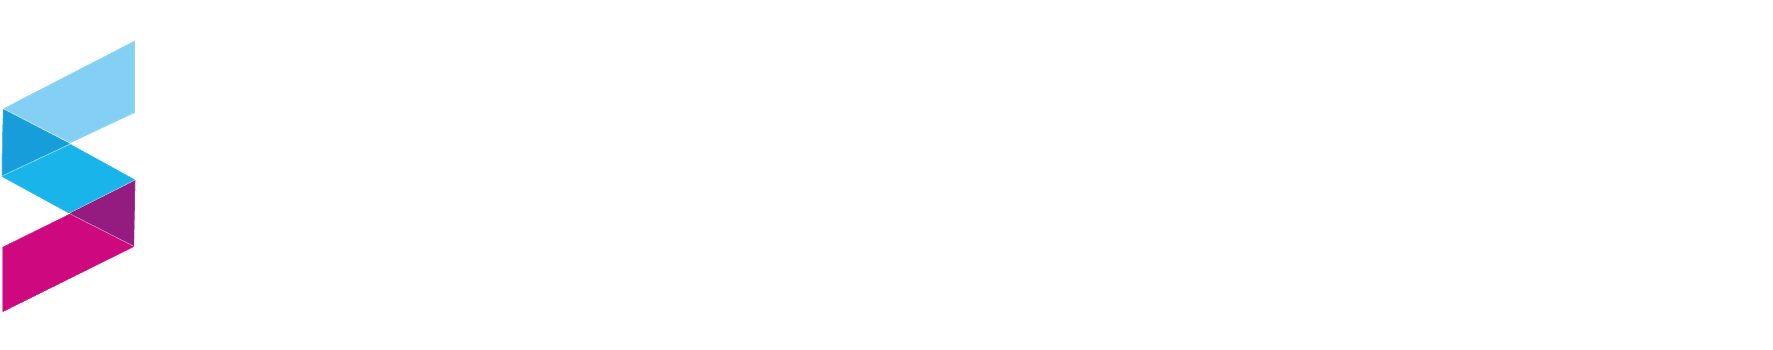 surfacelease logo